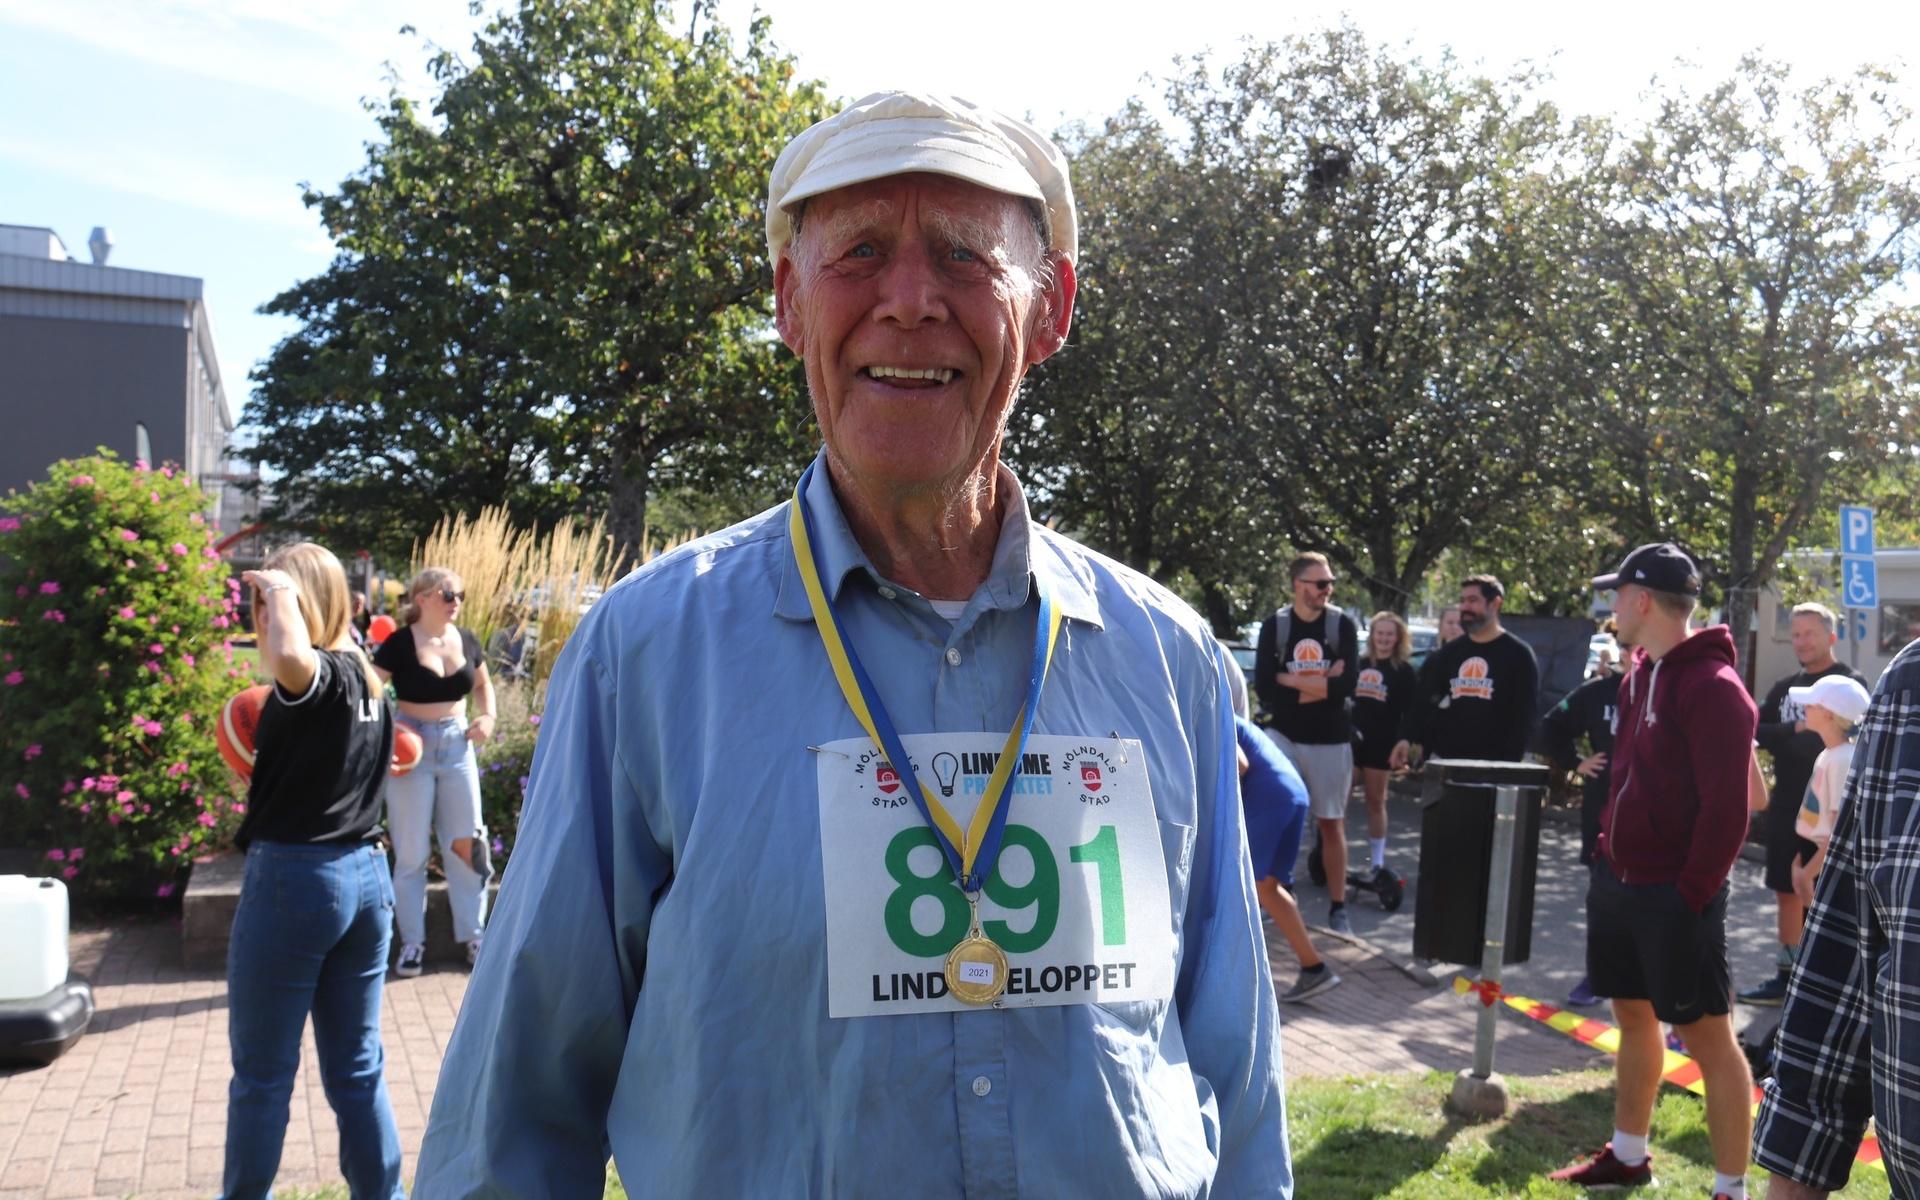 93-årige Allan Sagstrand, kanske inte snabbast, men med råge äldst i Lindomeloppet.